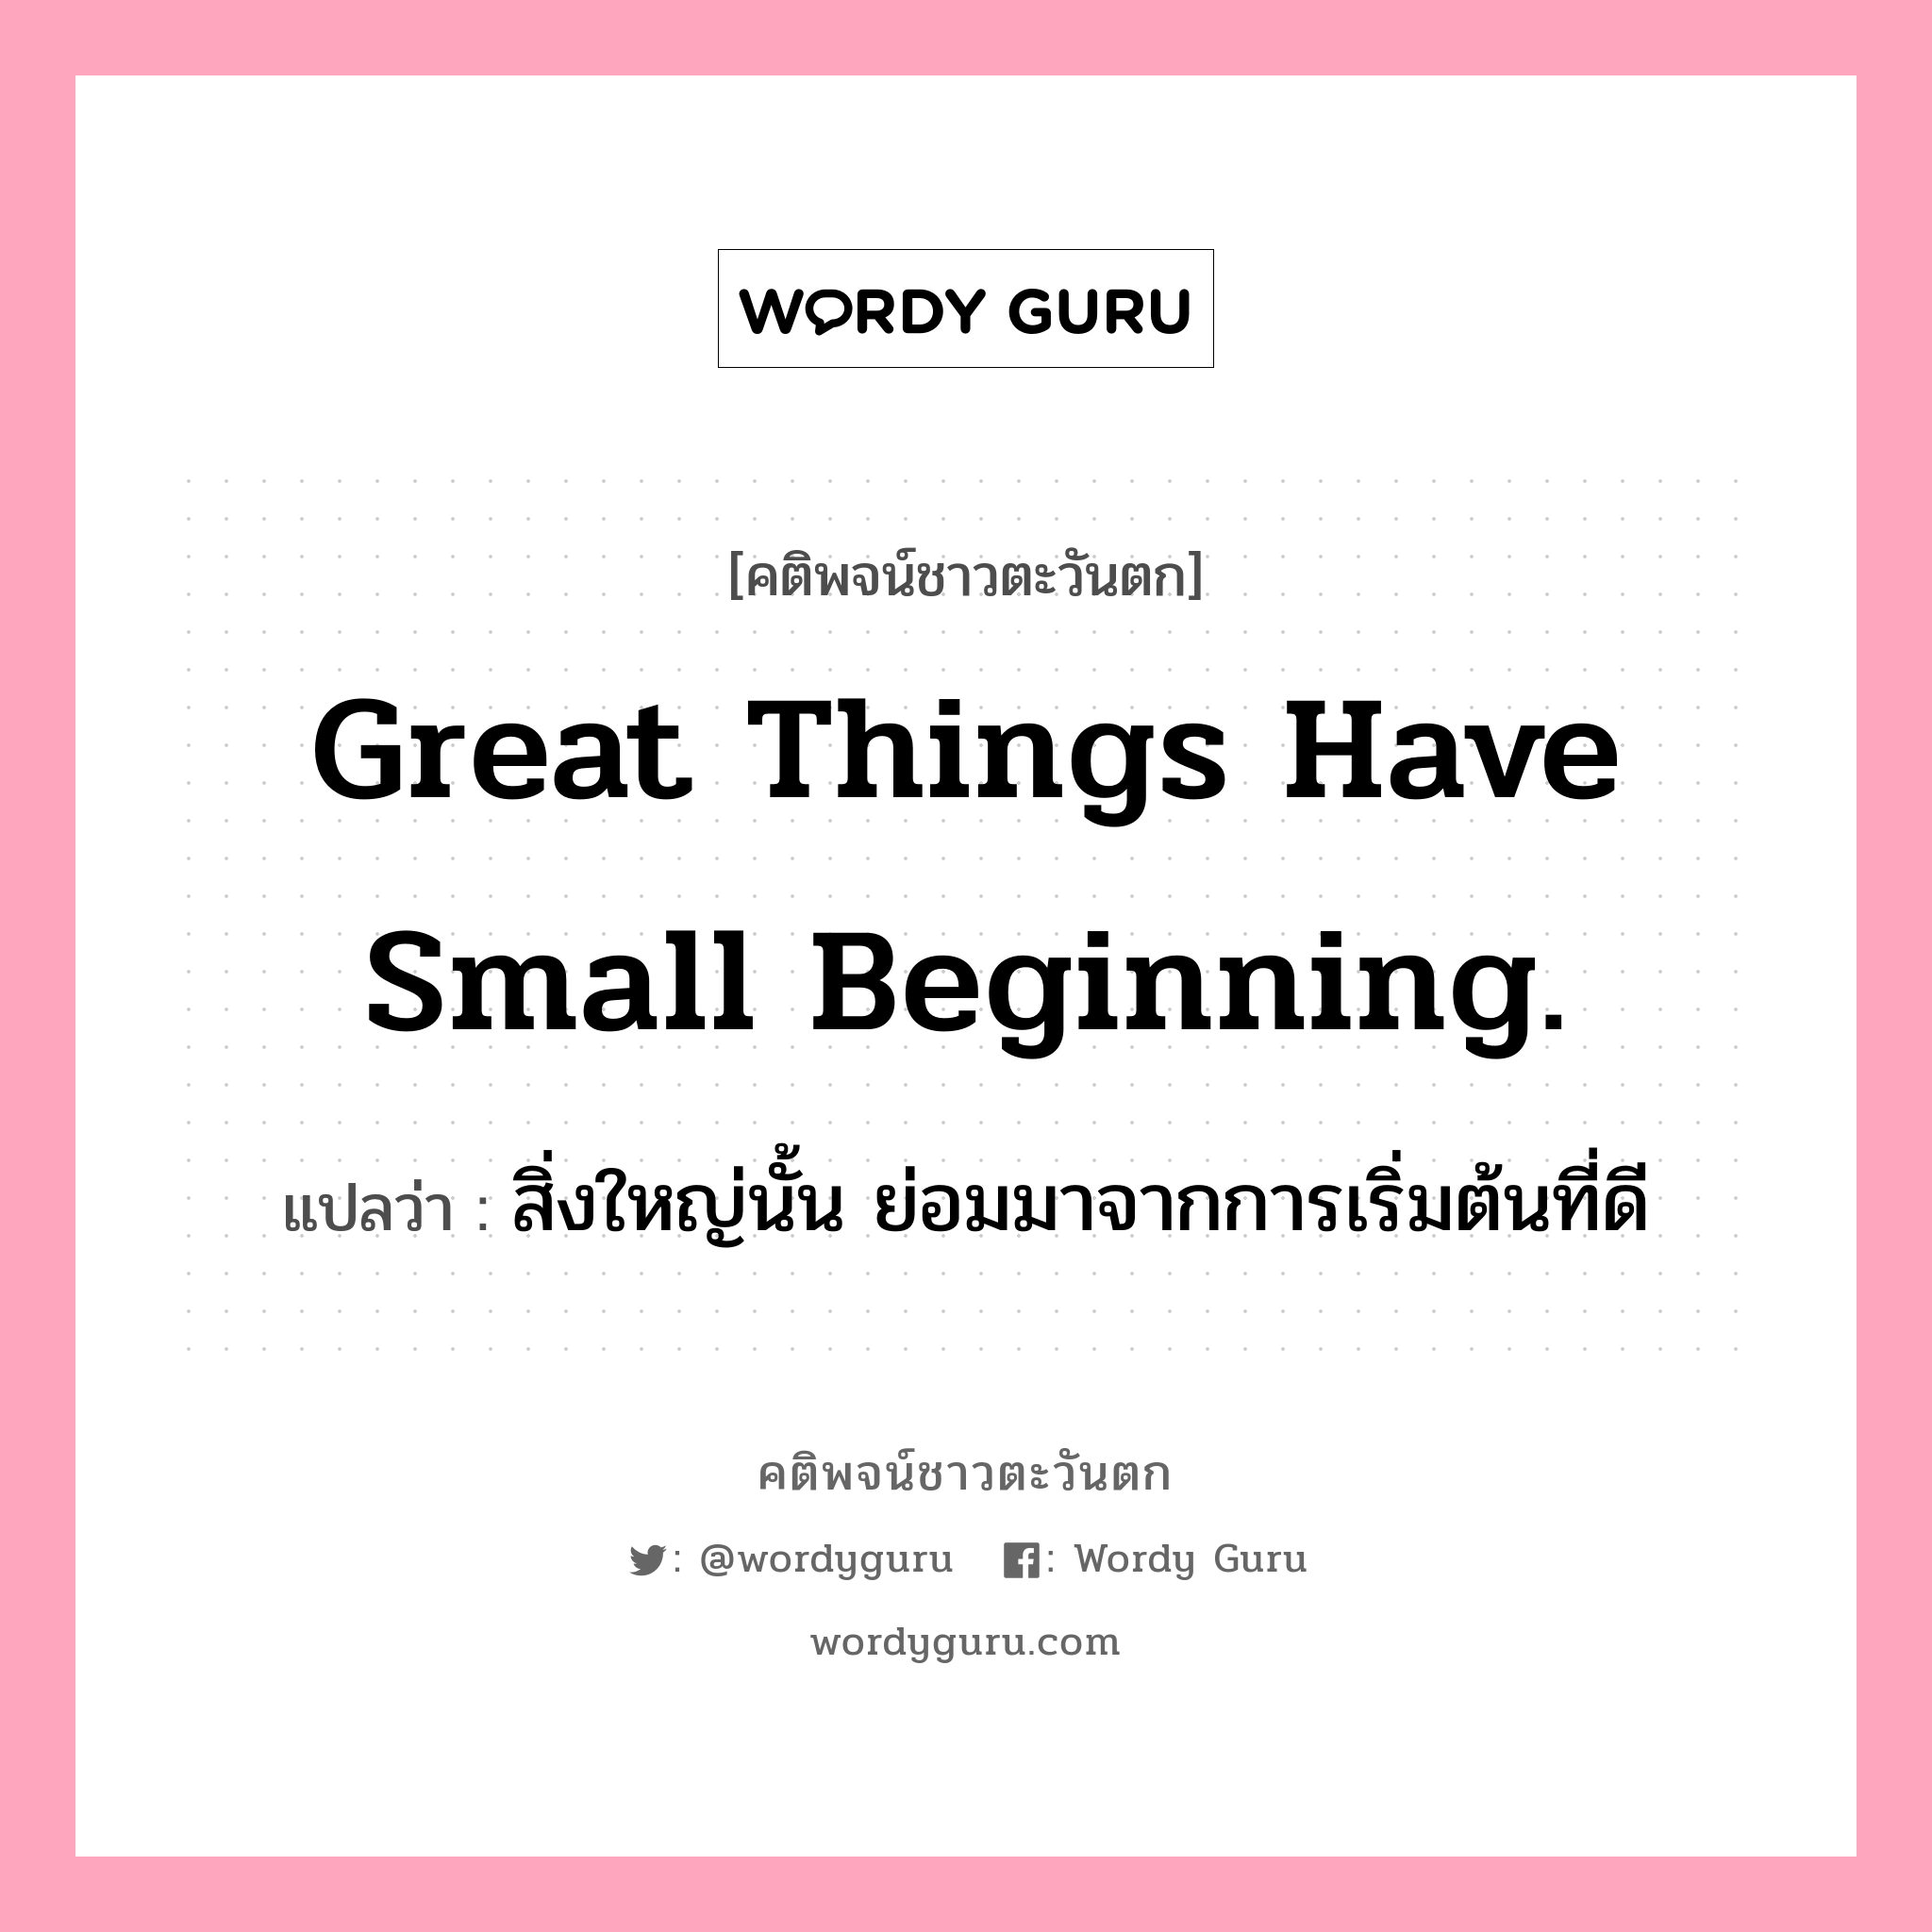 Great things have small beginning., คติพจน์ชาวตะวันตก Great things have small beginning. แปลว่า สิ่งใหญ่นั้น ย่อมมาจากการเริ่มต้นที่ดี